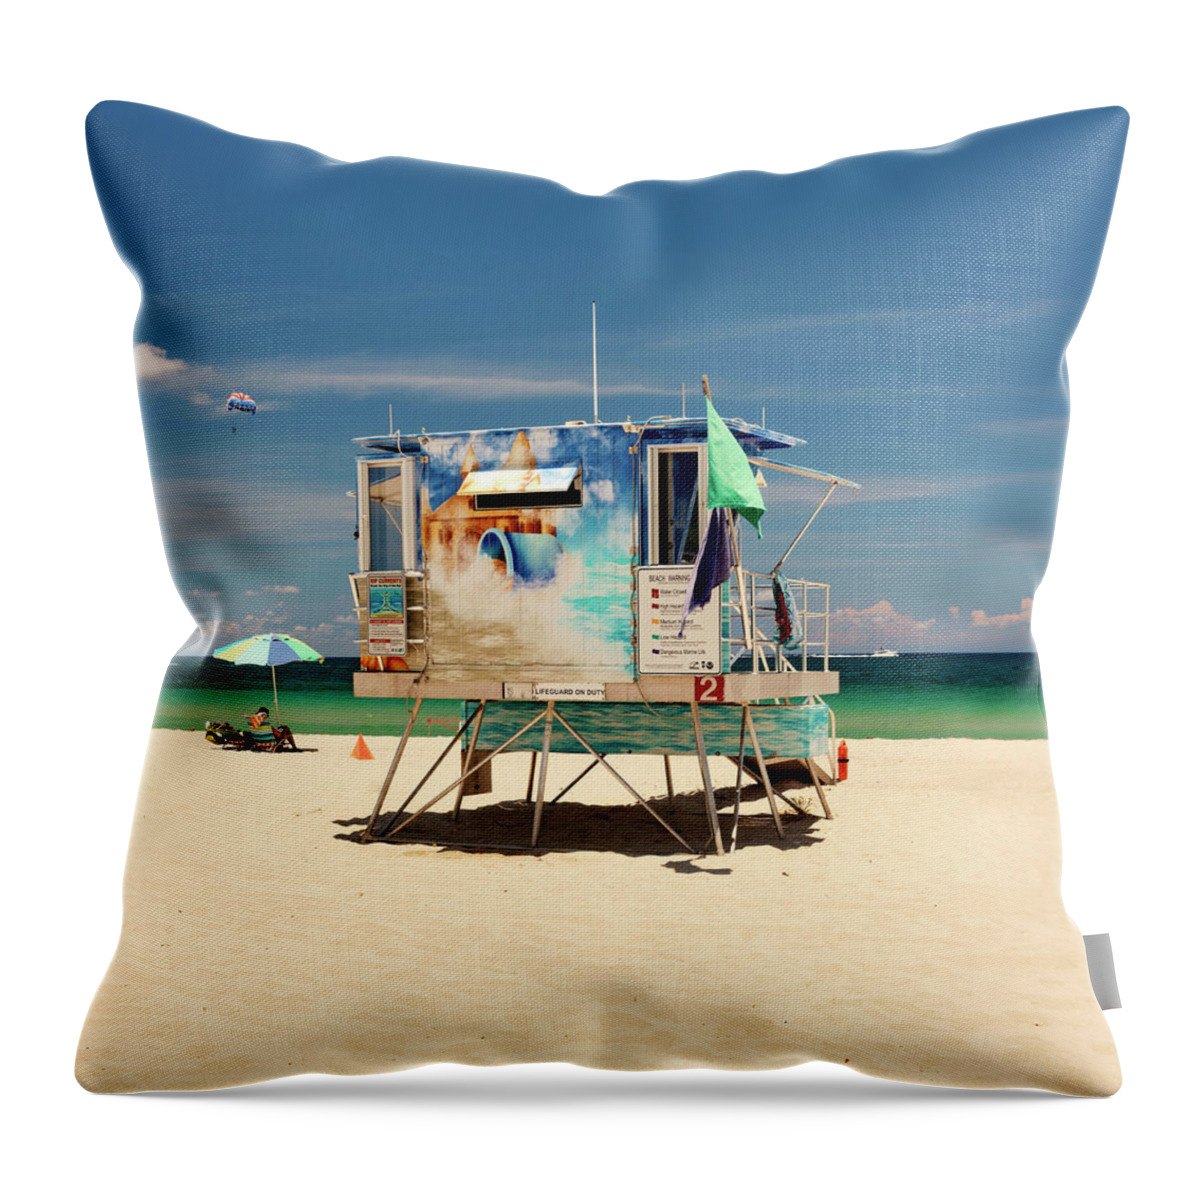 Estock Throw Pillow featuring the digital art Florida, South Florida, Fort Lauderdale Beach, Lifeguard Station With Tourists Parasailing #2 by Gabriel Jaime Jimenez